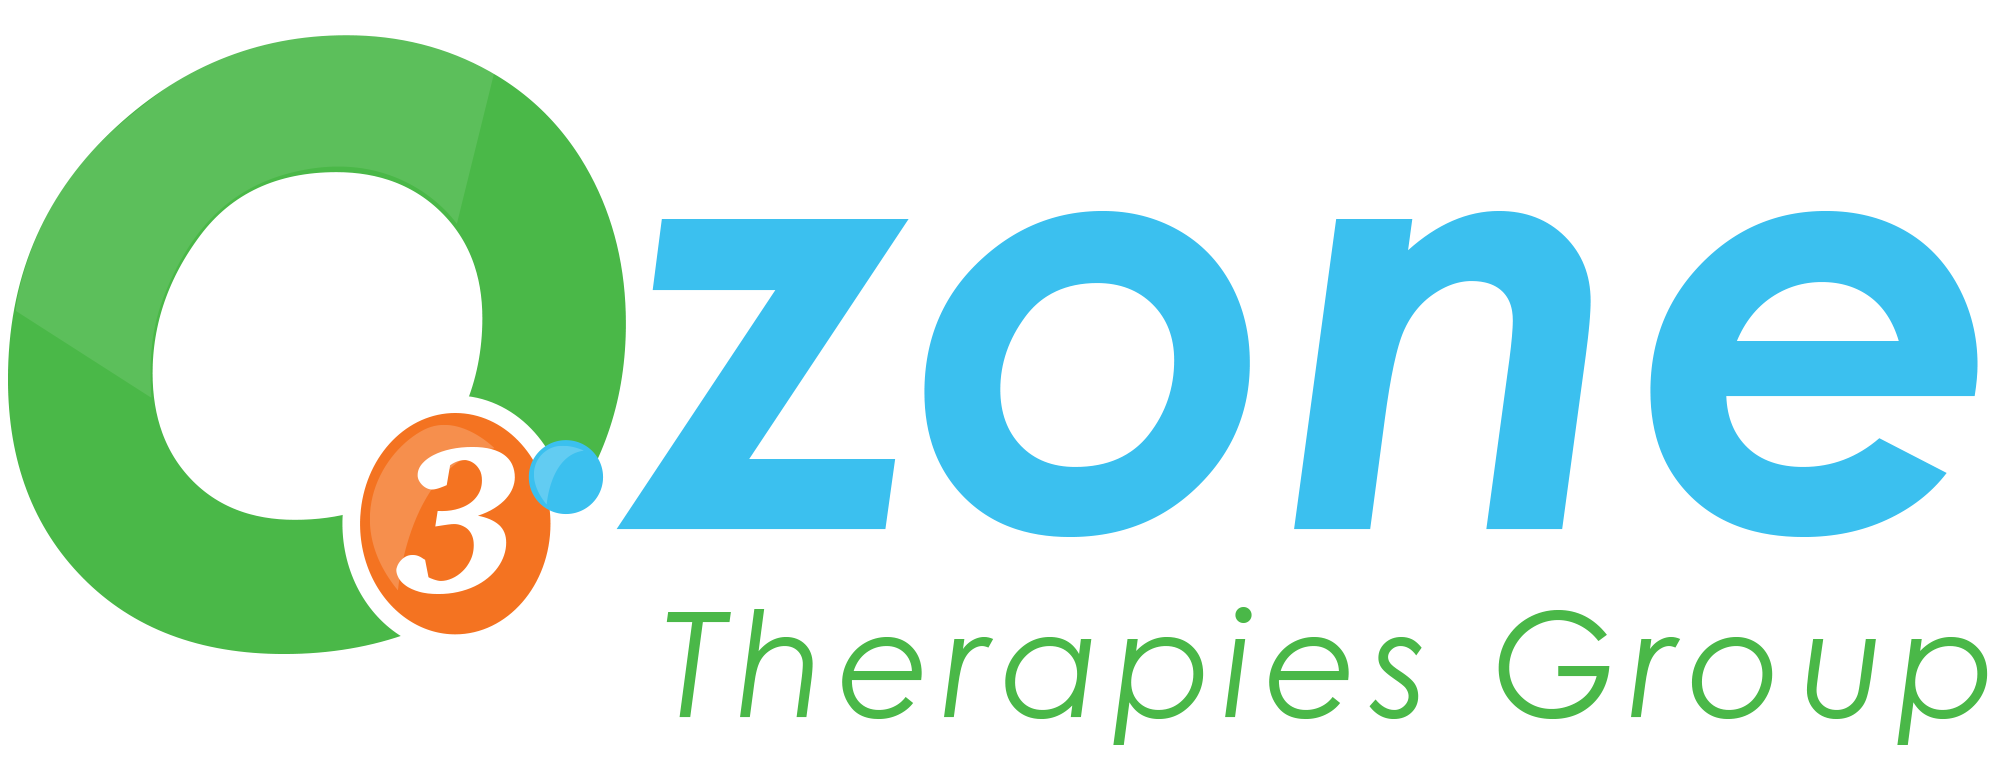 Ozone Therapies Group Logo